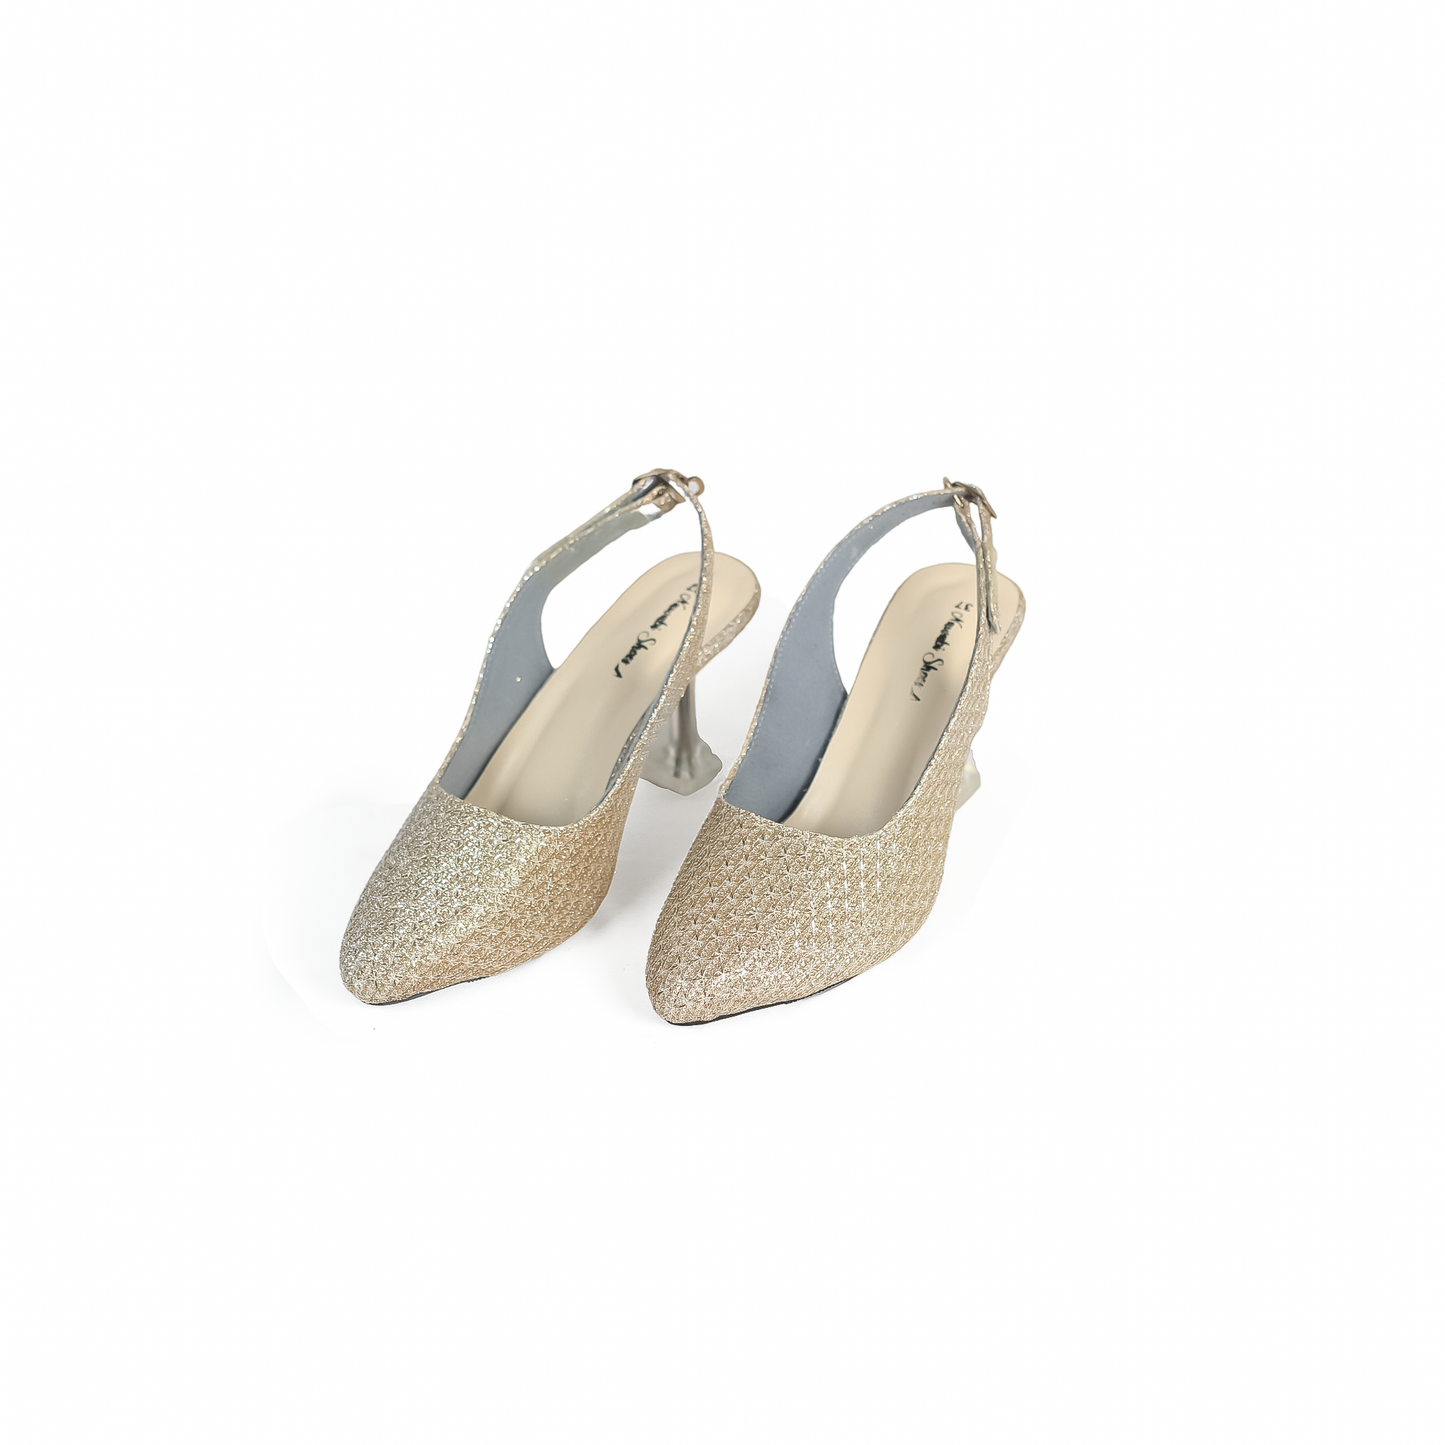 Transparent Heels at Nawabi Shoes BD: The Peak of Elegance!